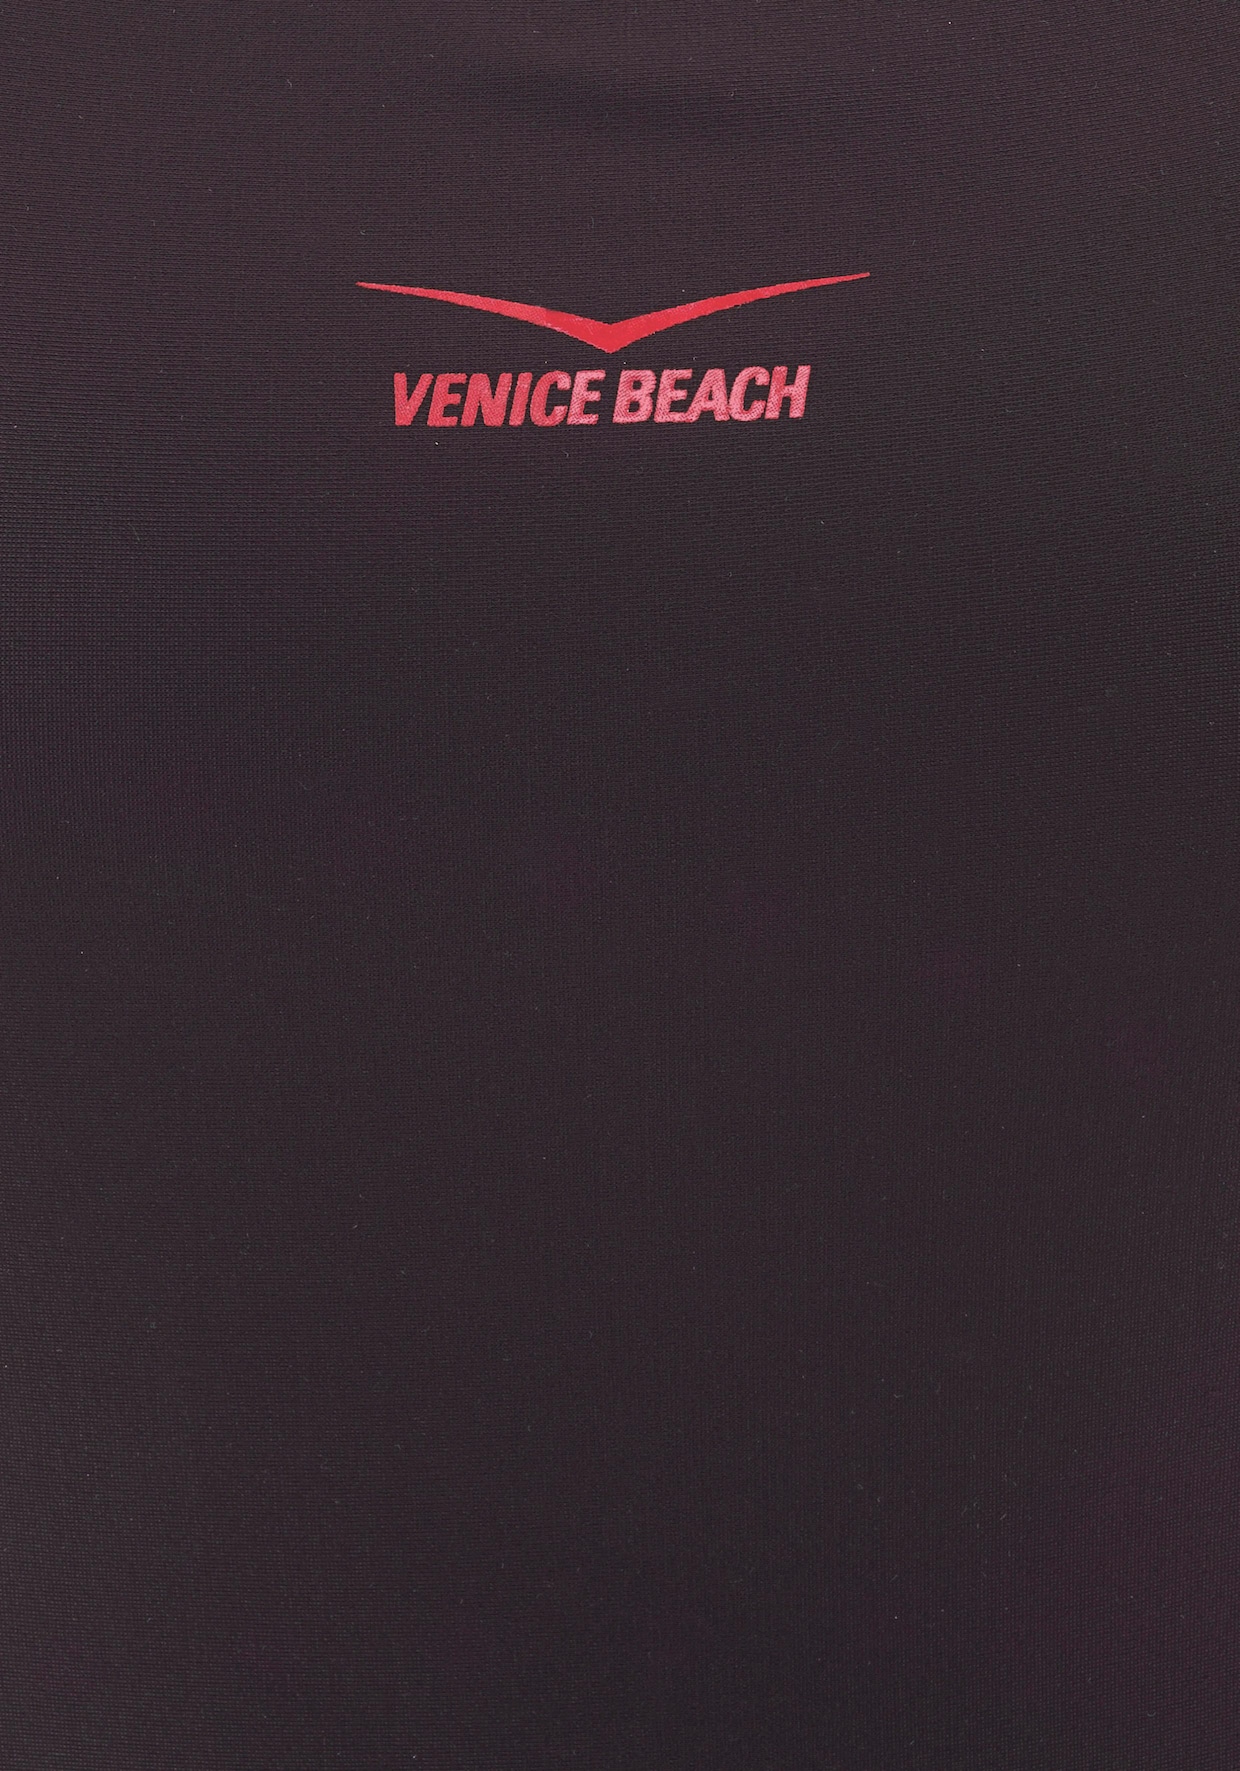 Venice Beach Maillot de bain - marron-corail